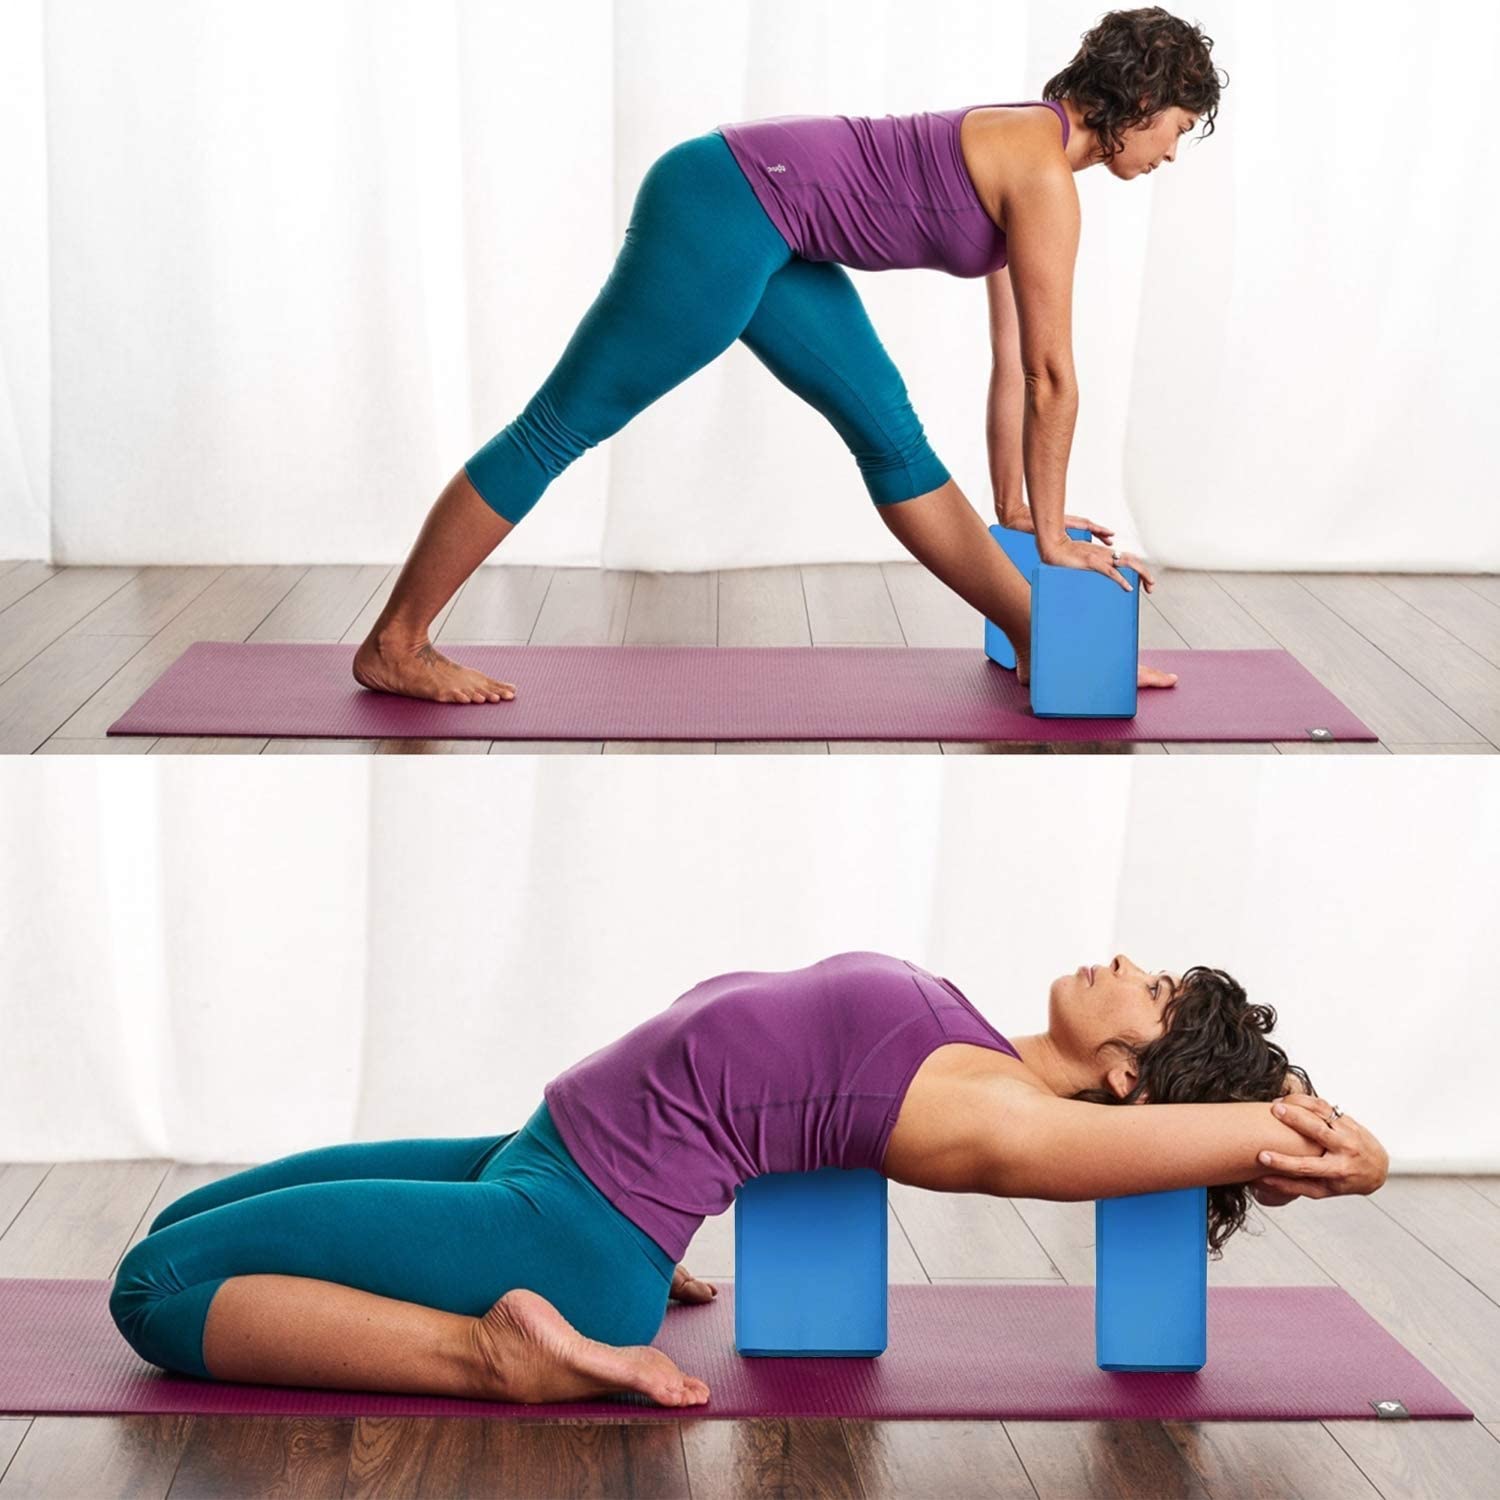 ZDQTRA high Density eva Foam Yoga Blocks Set of 2,Non Toxic Anti Skid Yoga  Brick Block for Improve Strength and Aid Balance and Flexibility for Women